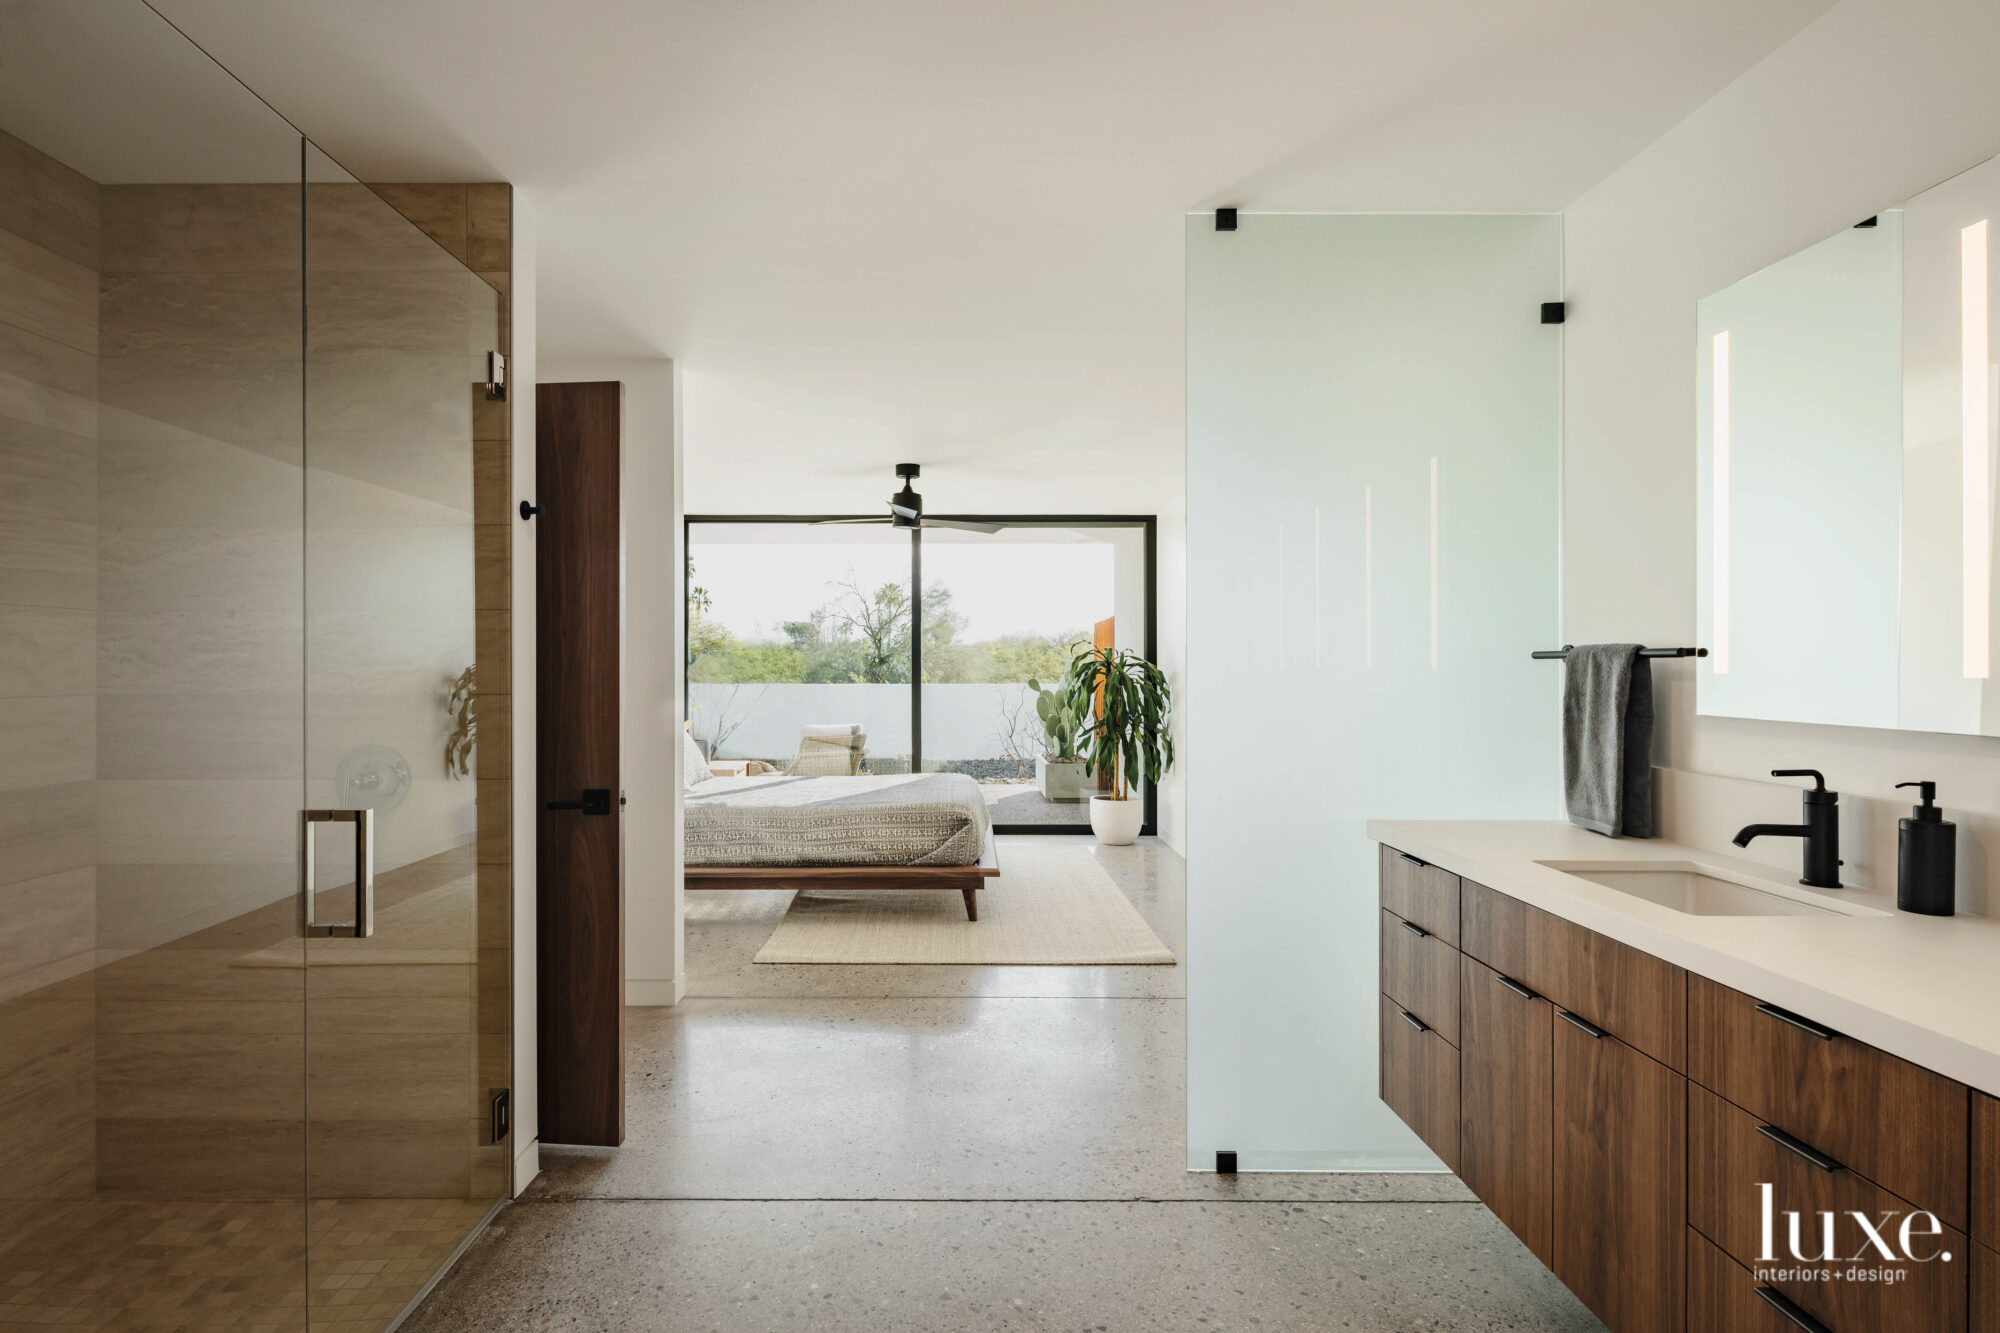 The in-law suite has an open plan bedroom and en-suite bathroom with concrete floors.